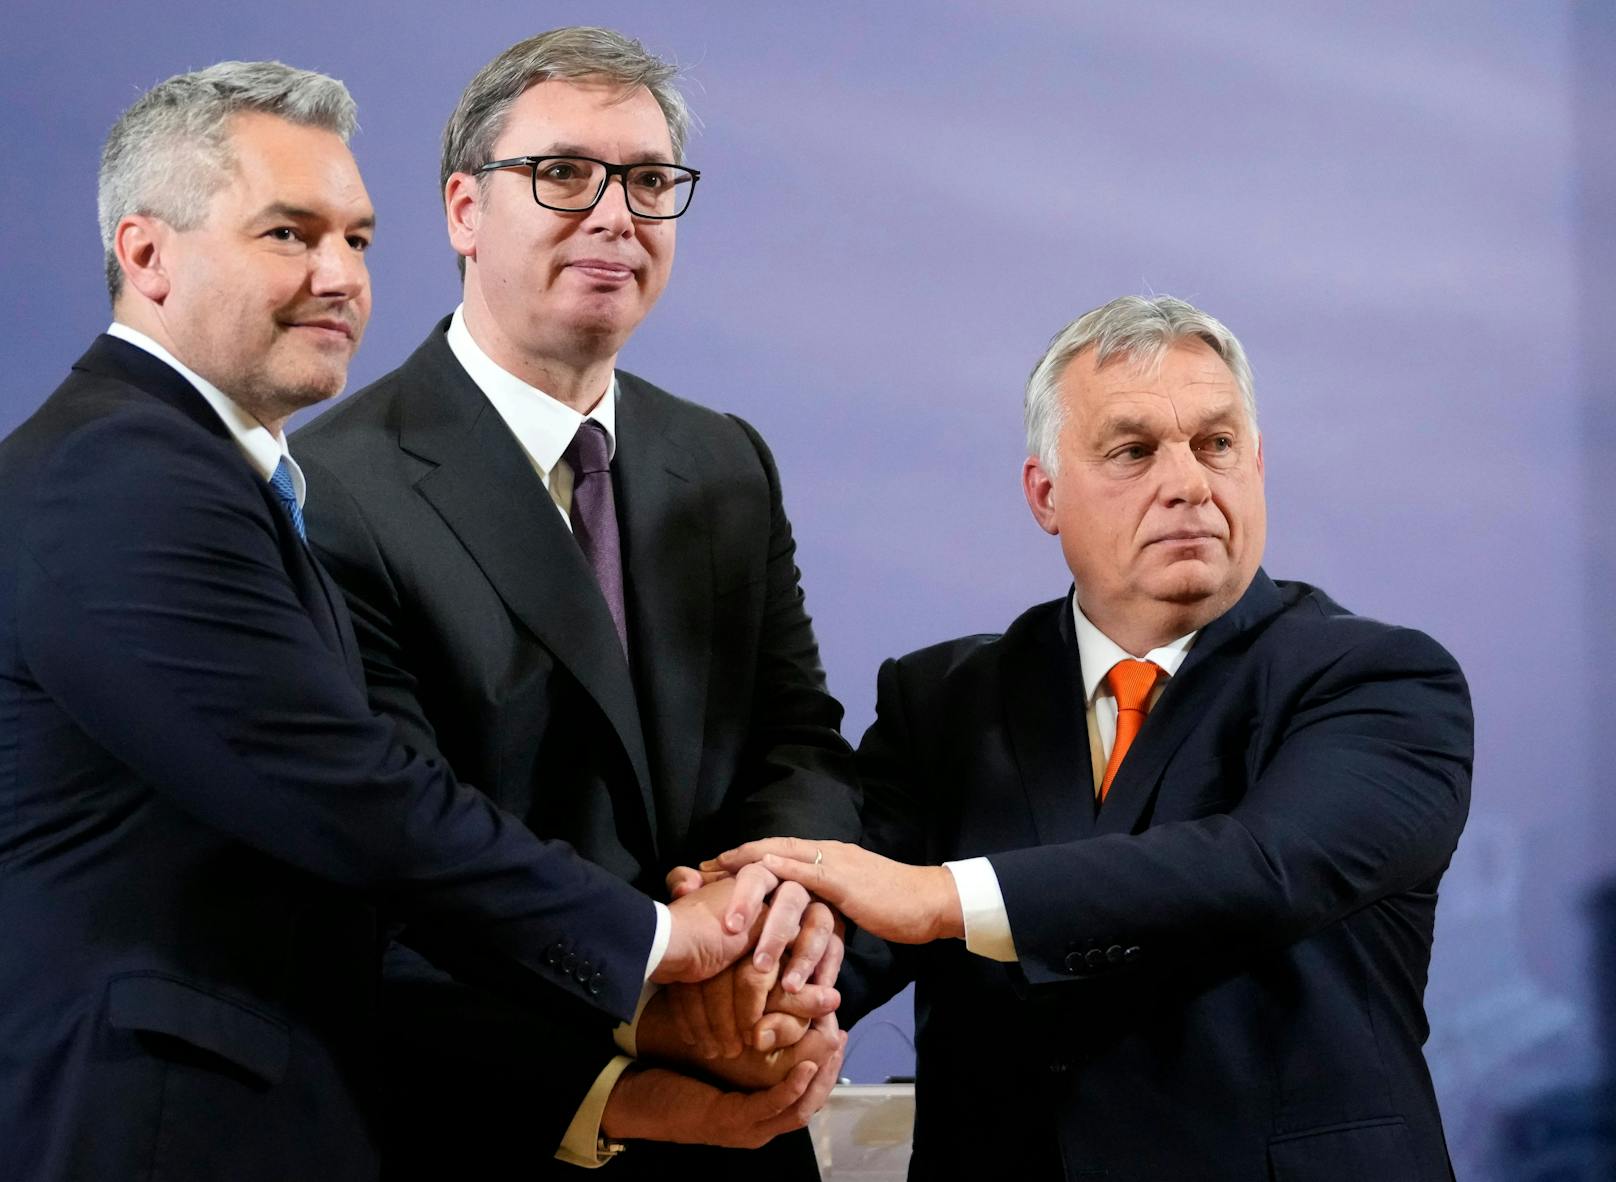 Karl Nehammer, Aleksandar Vučić und Viktor Orban – die selbsternannte "starke Achse im Kampf gegen illegale Migration".